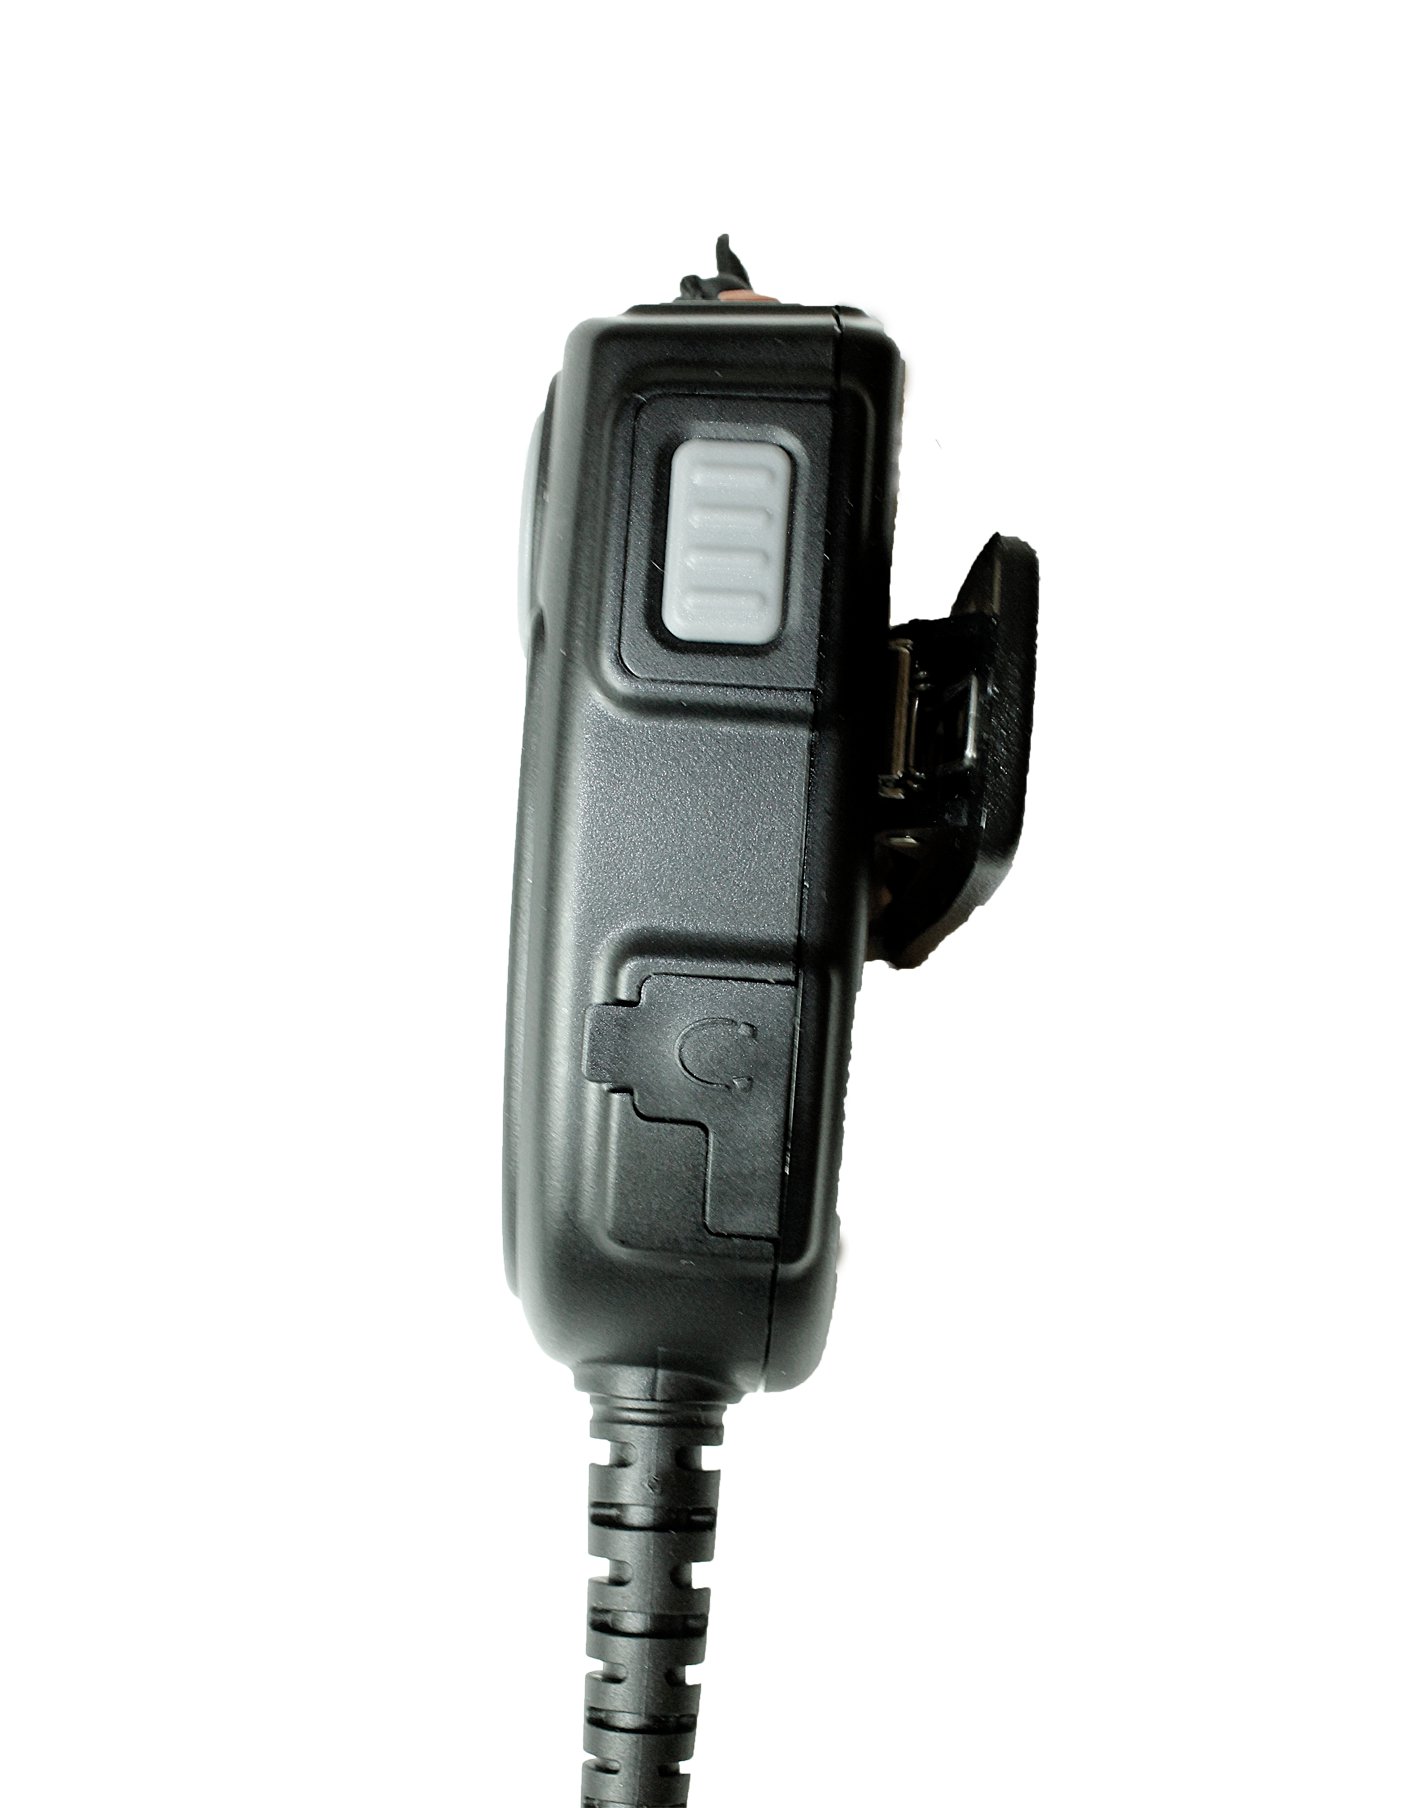 TITAN Lautsprechermikrofon MM20 mit Nexus 01 passend für Hytera PD405, PD415, PD505, PD505LF